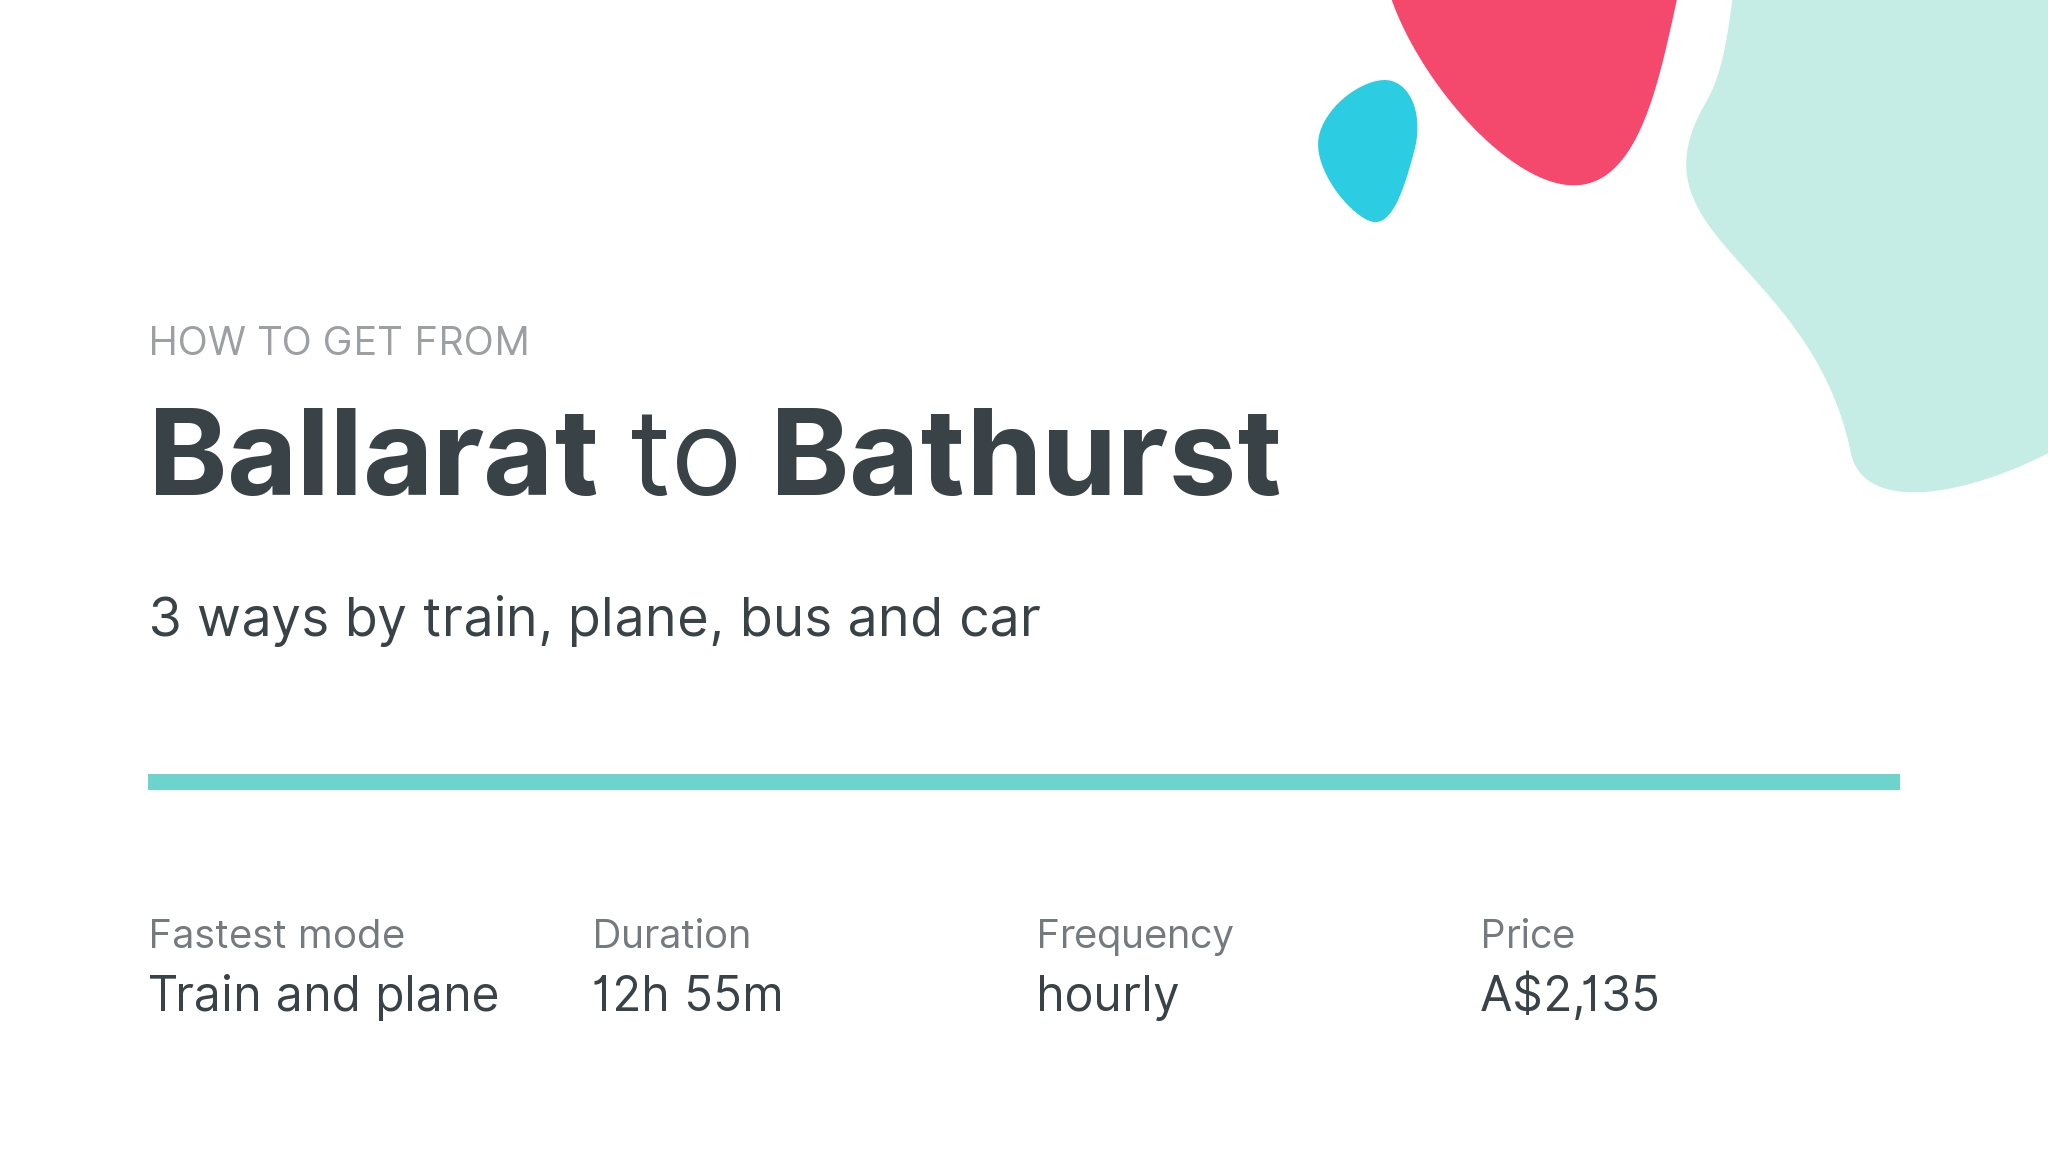 How do I get from Ballarat to Bathurst